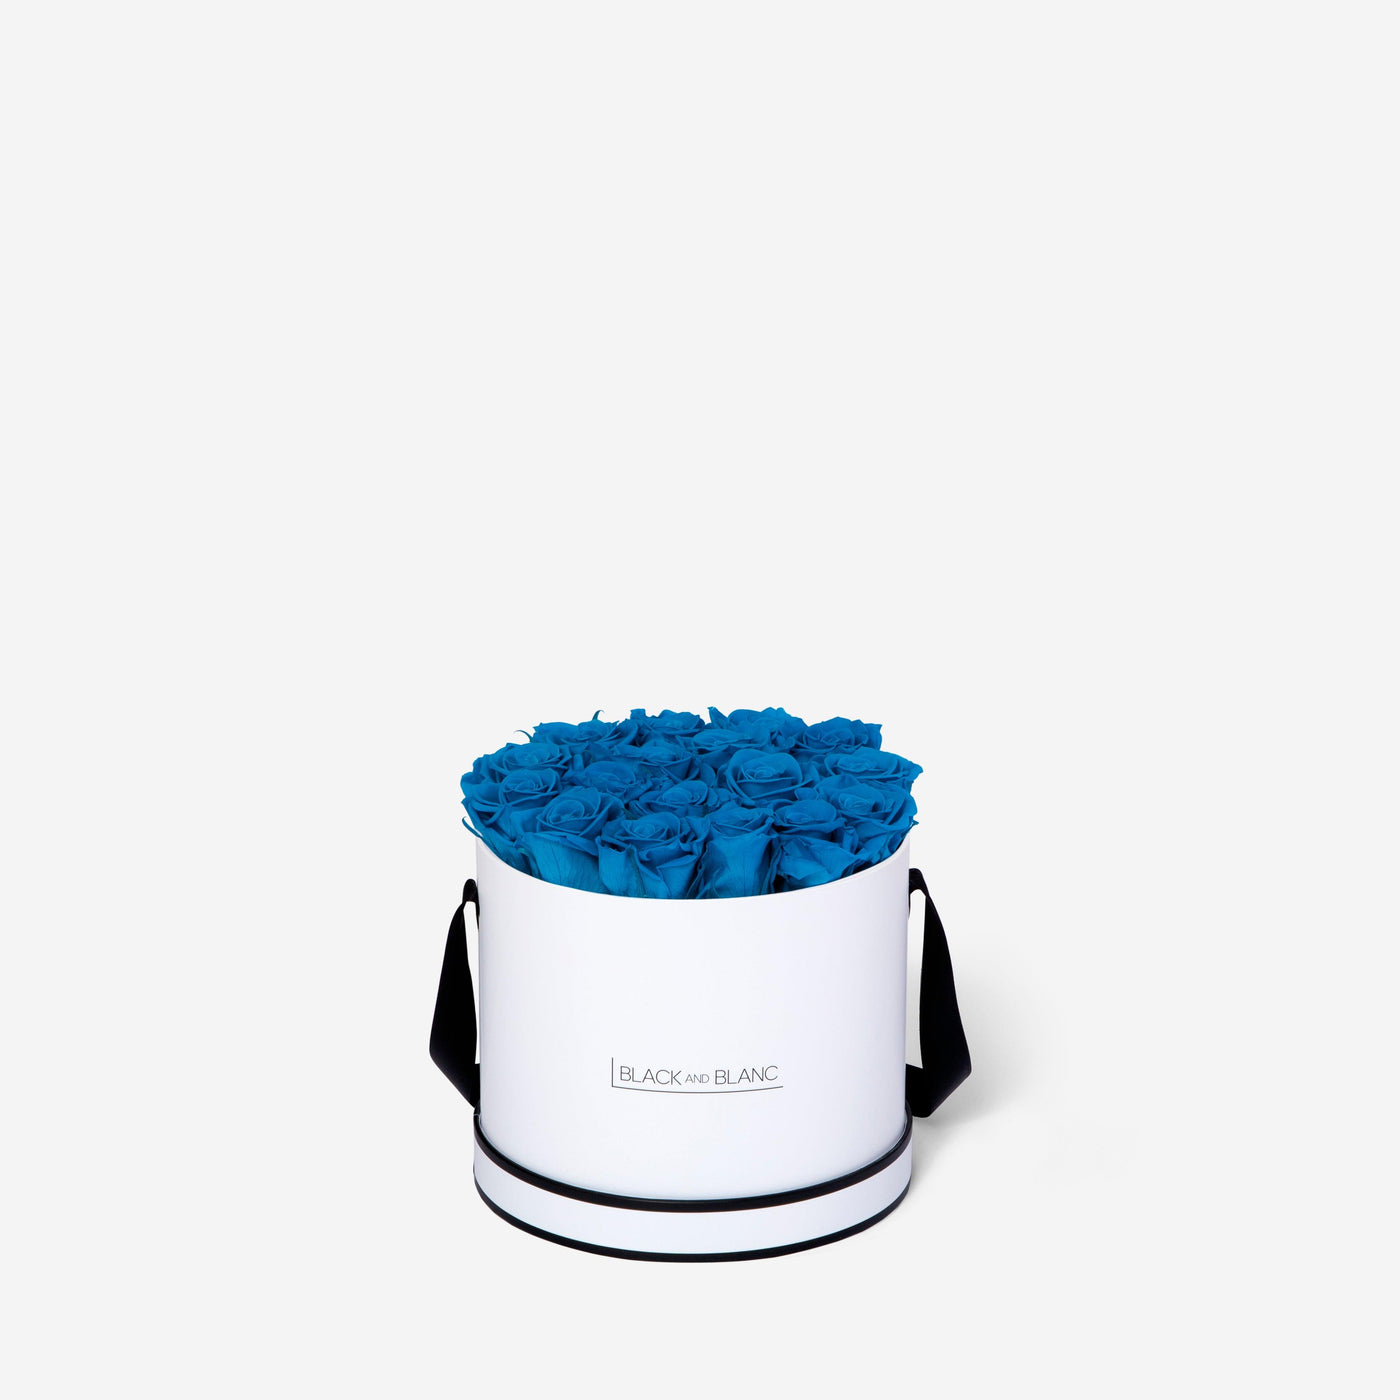 Aqua Blue Round - Infinity Roses - BLACK AND BLANC